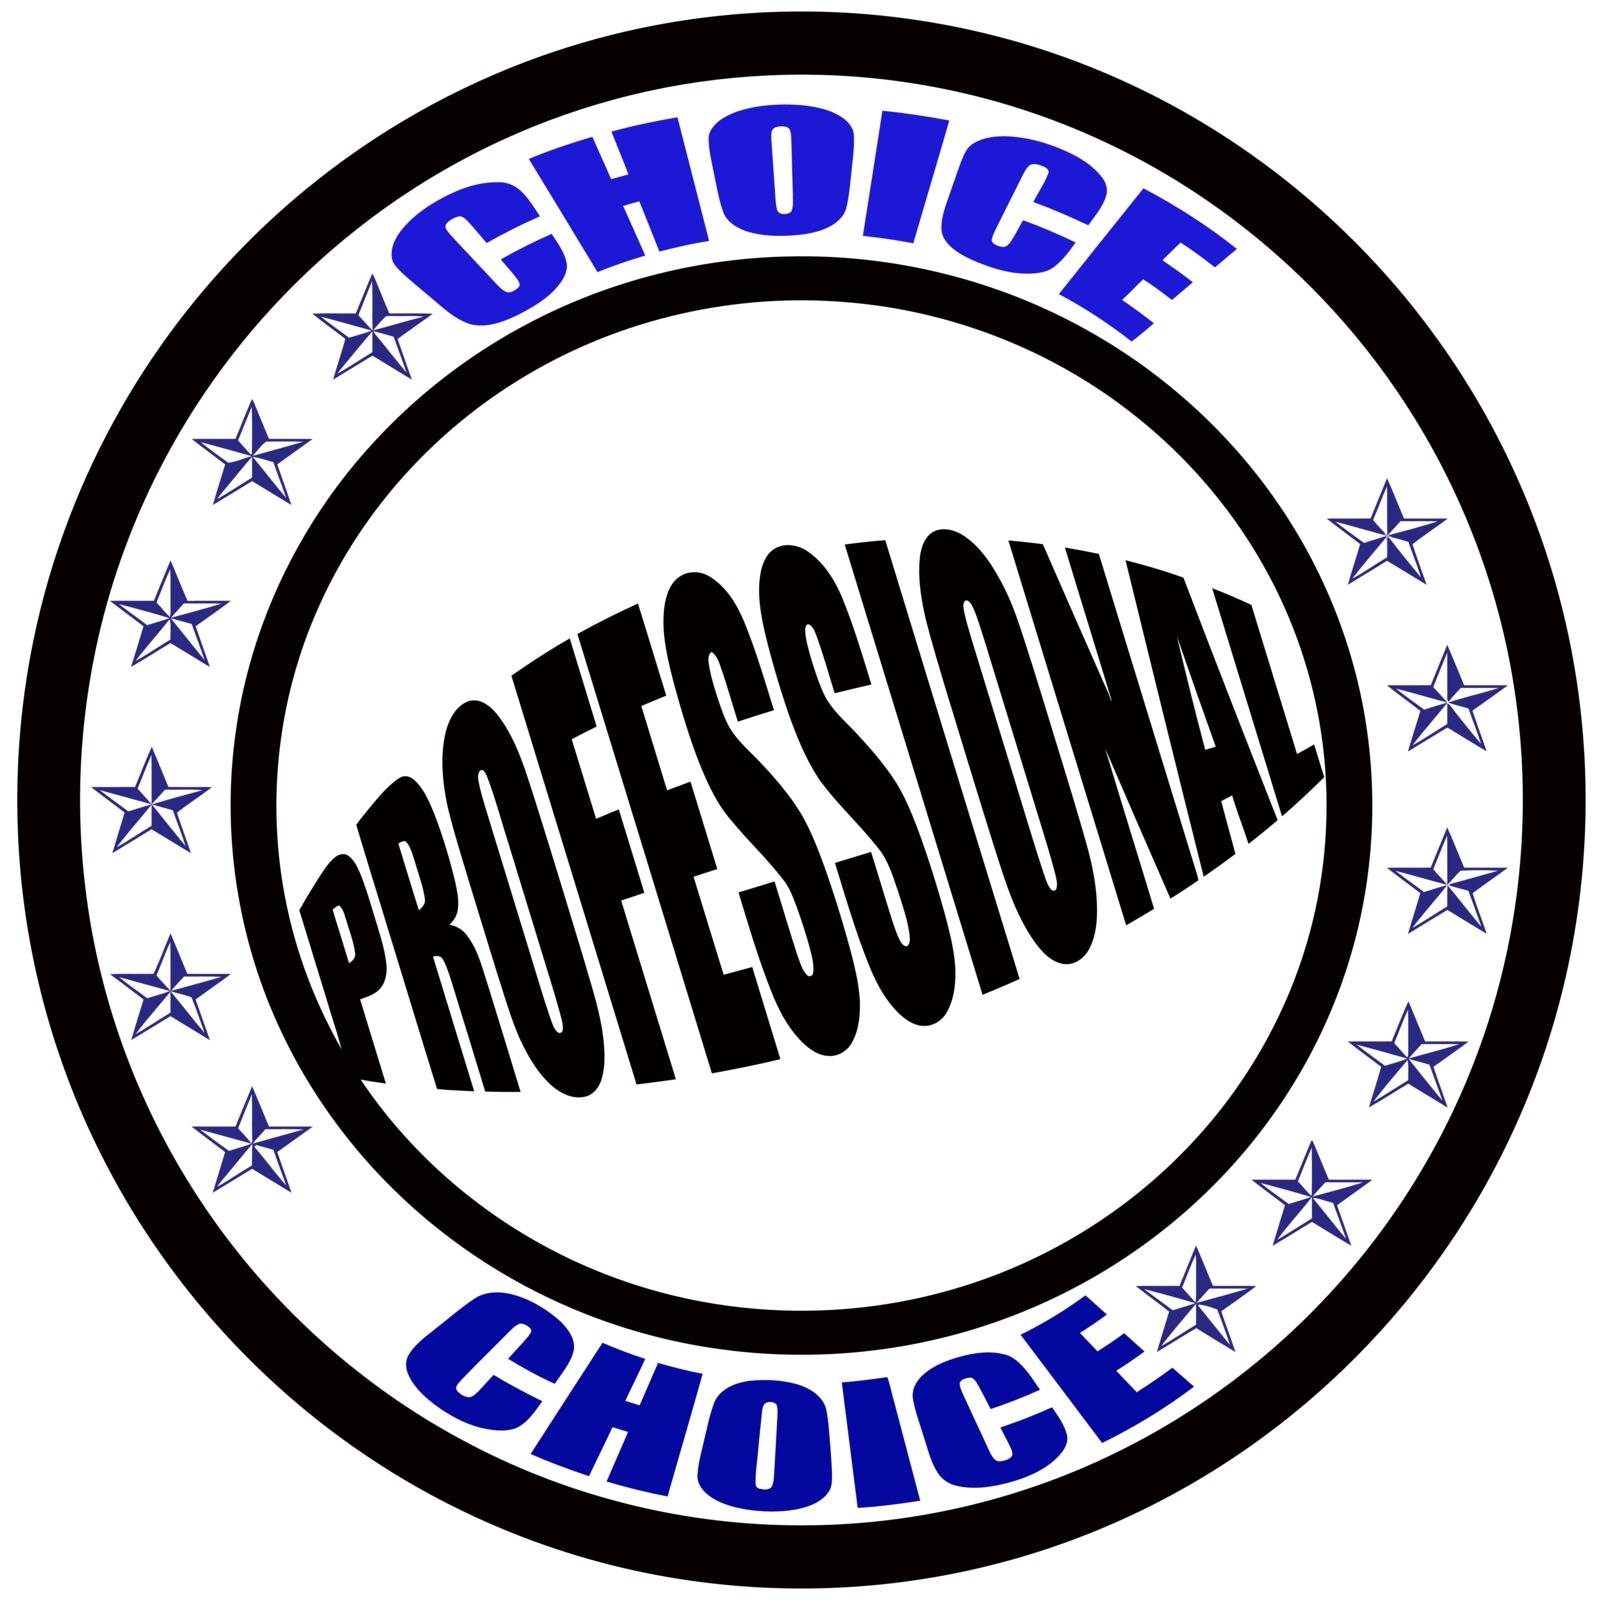 Professional choice by carmenbobo